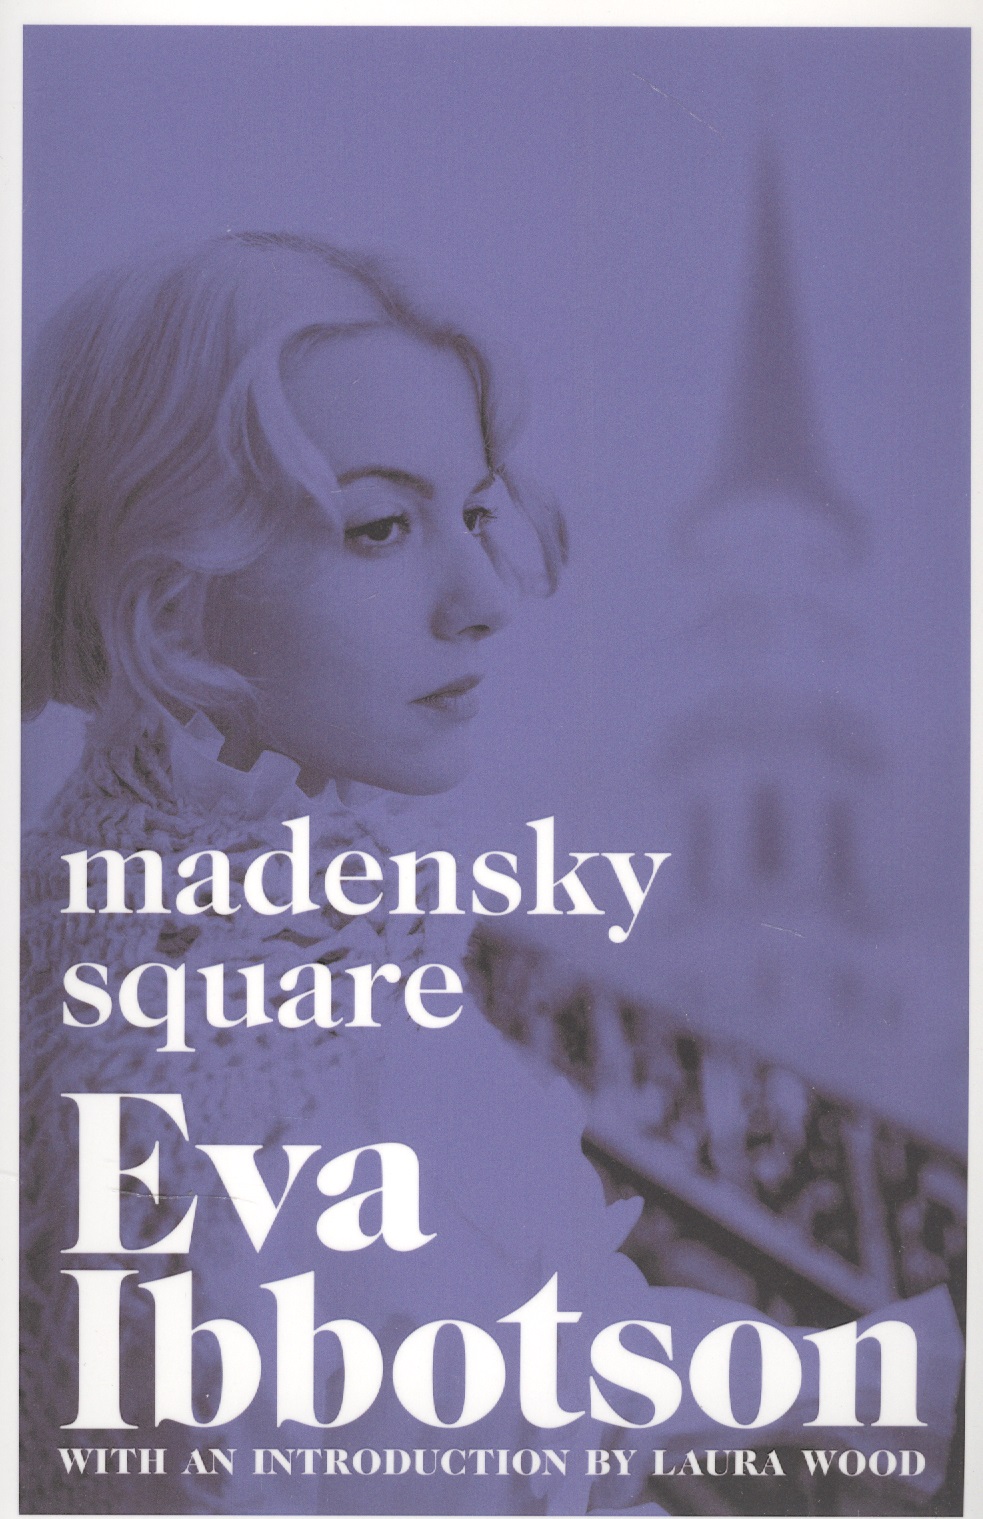 ibbotson eva magic flutes Ibbotson Eva Madensky Square